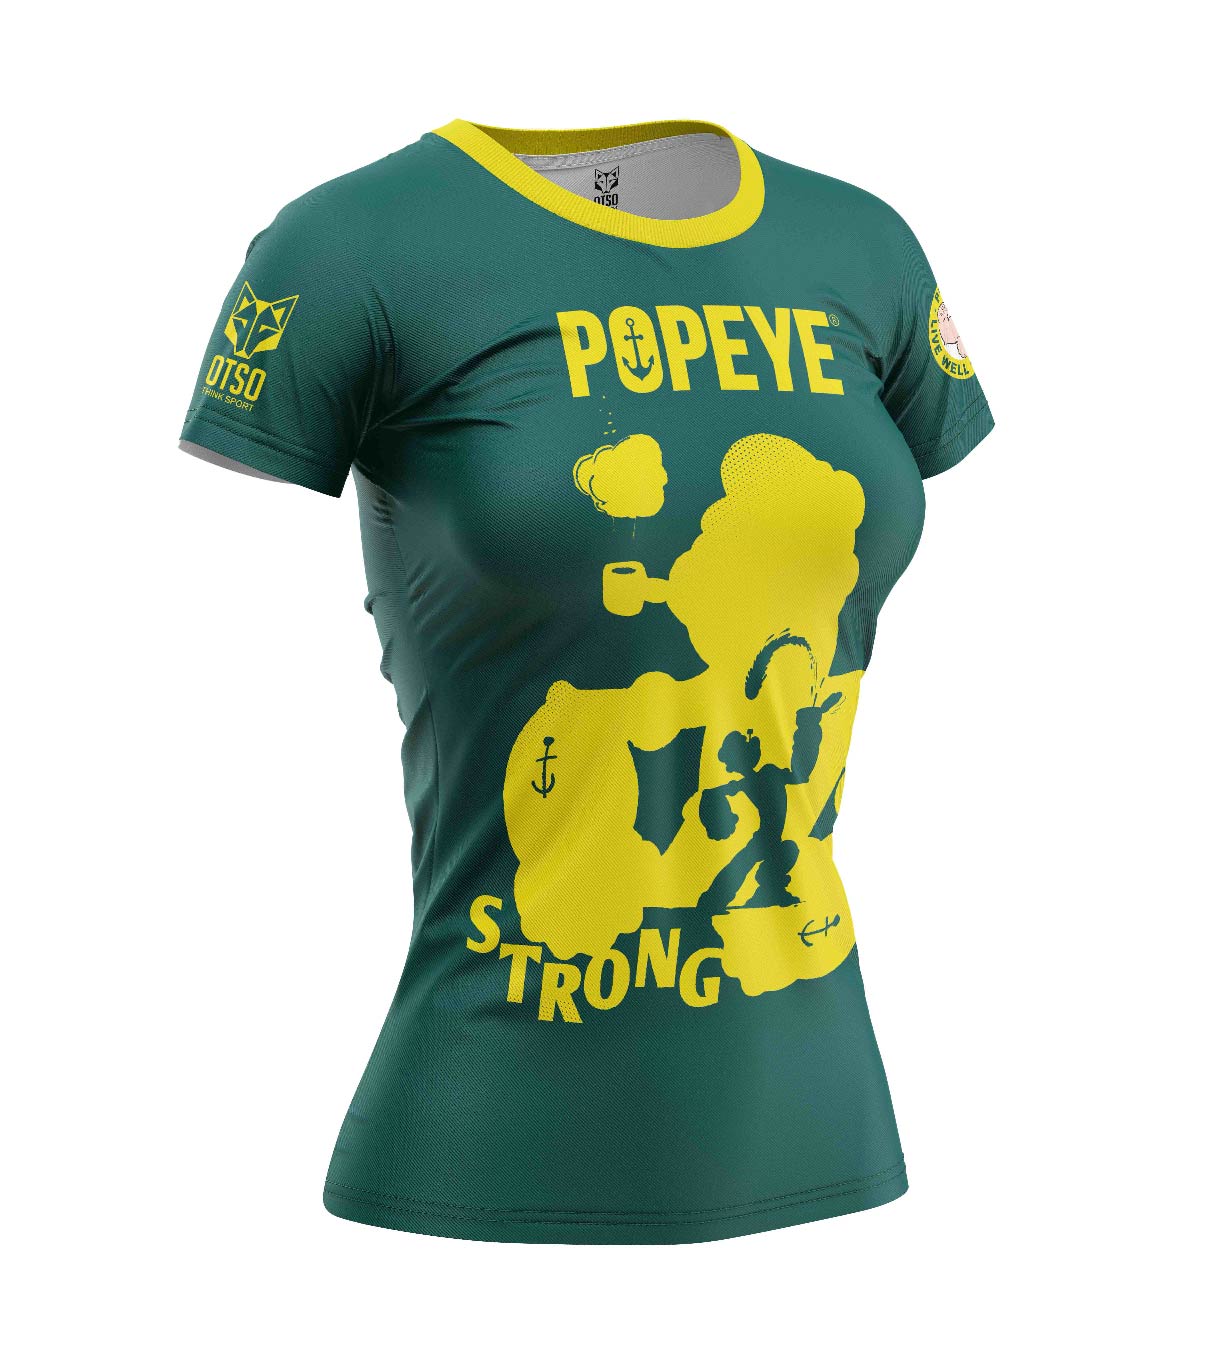 Camiseta manga corta mujer - Popeye Strong